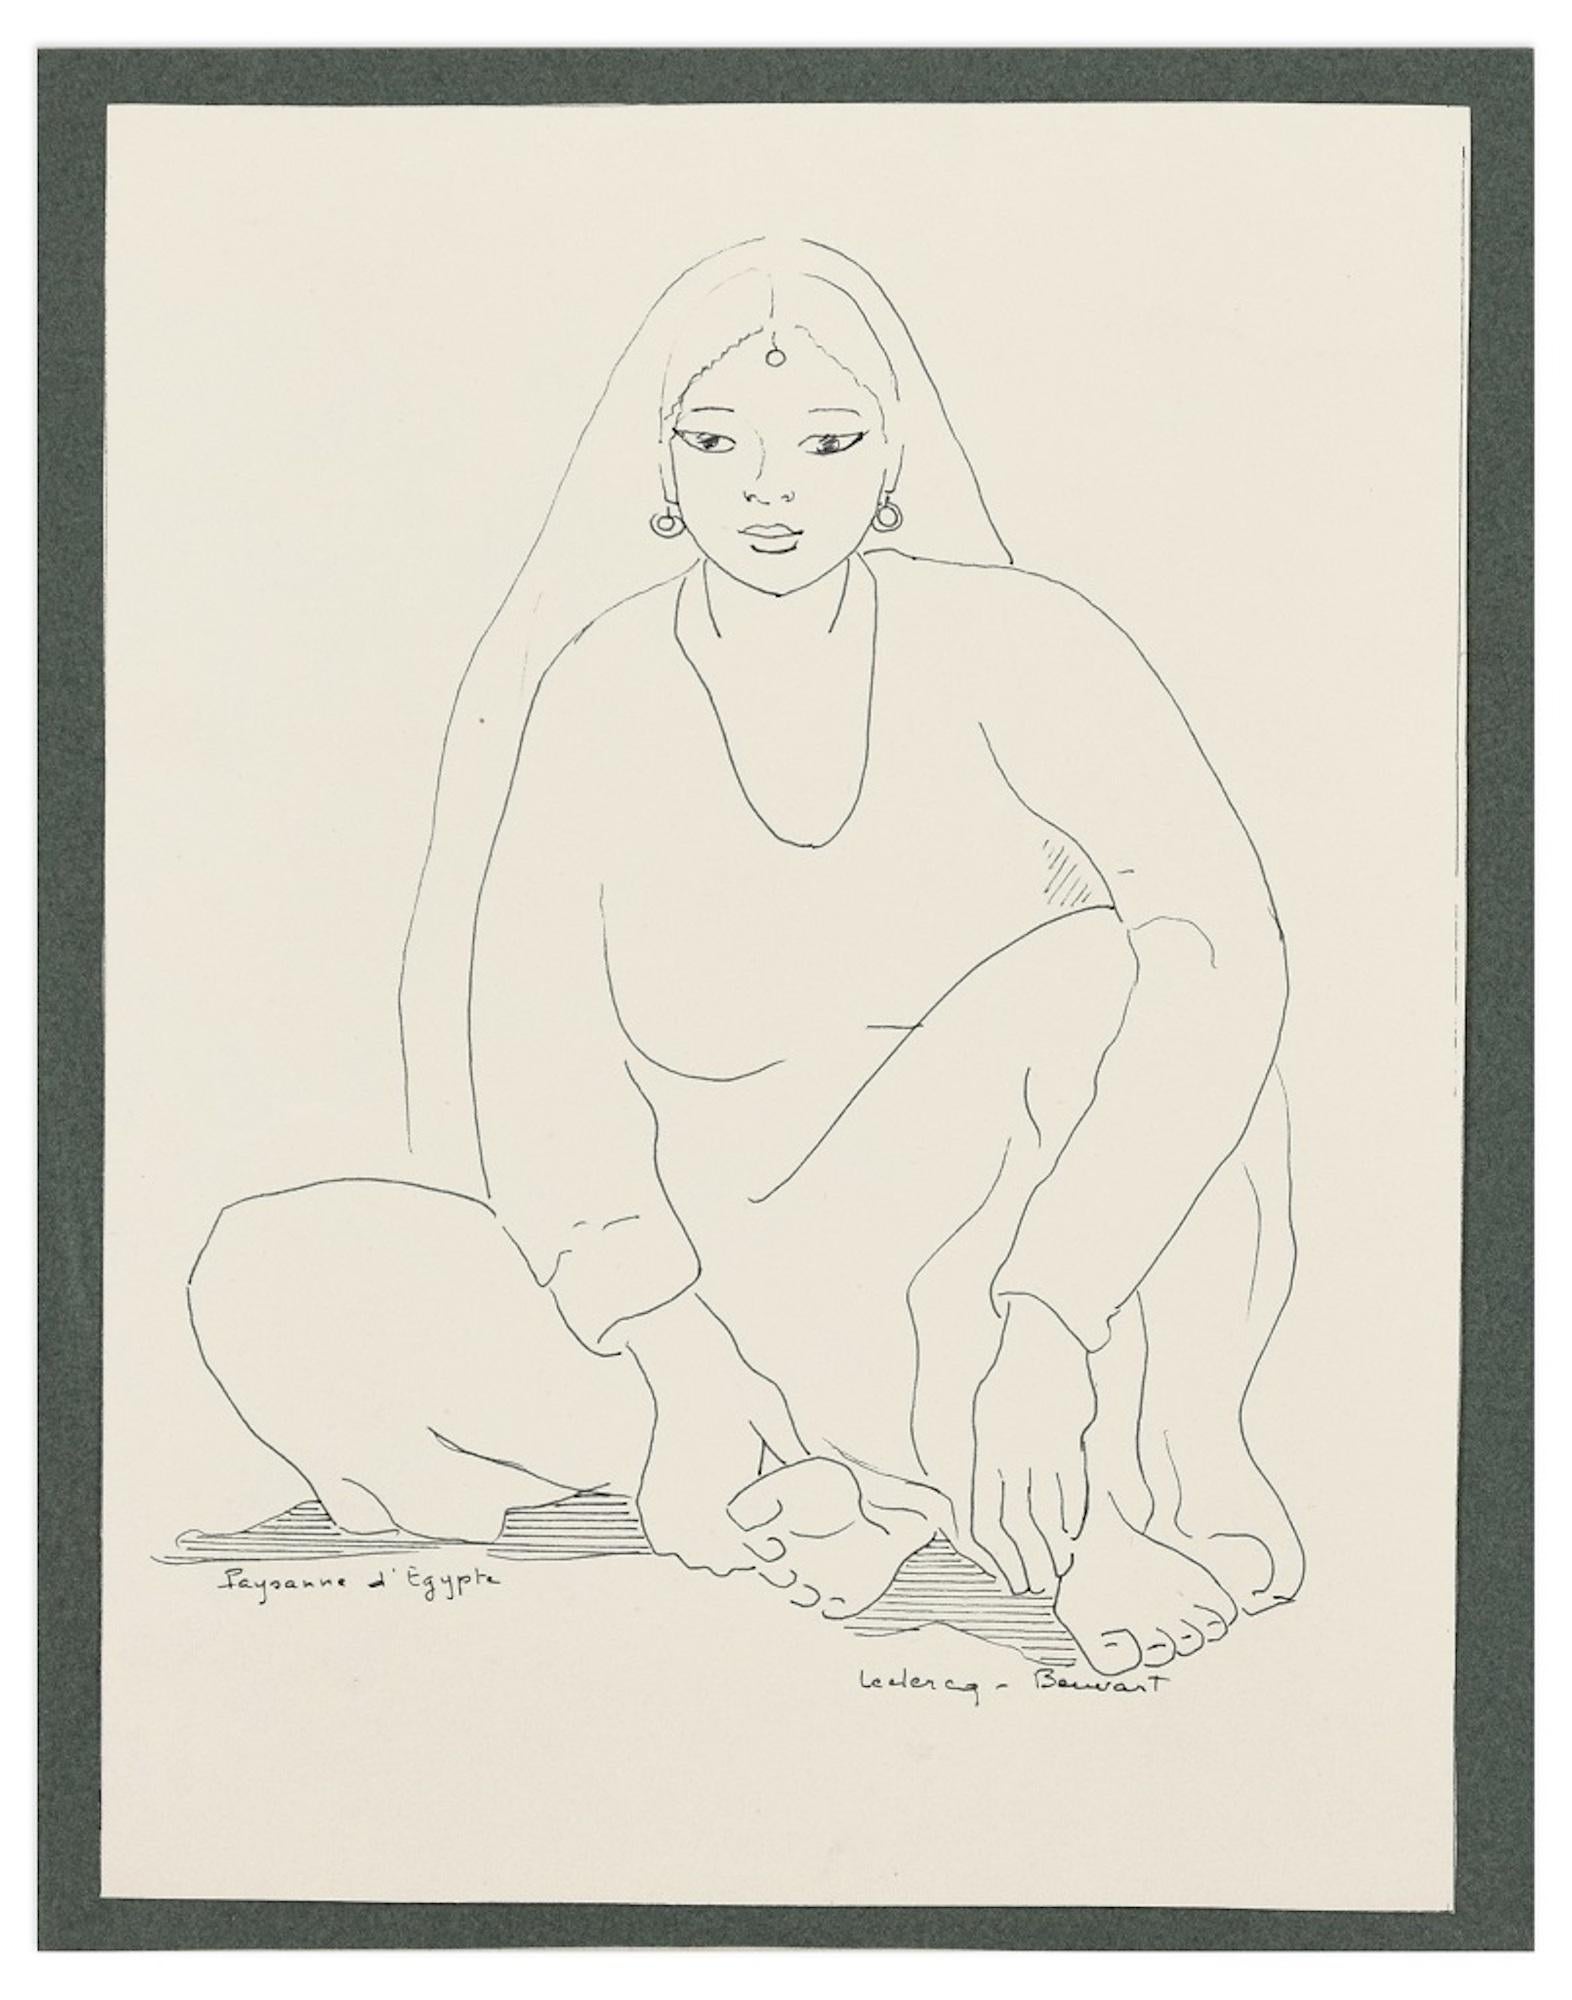 Simone Leclercq-Beuvart Figurative Art - Paysanne d’Egypte - Original Ink Drawing by S. Leclercq-Beuvart - Mid 1900